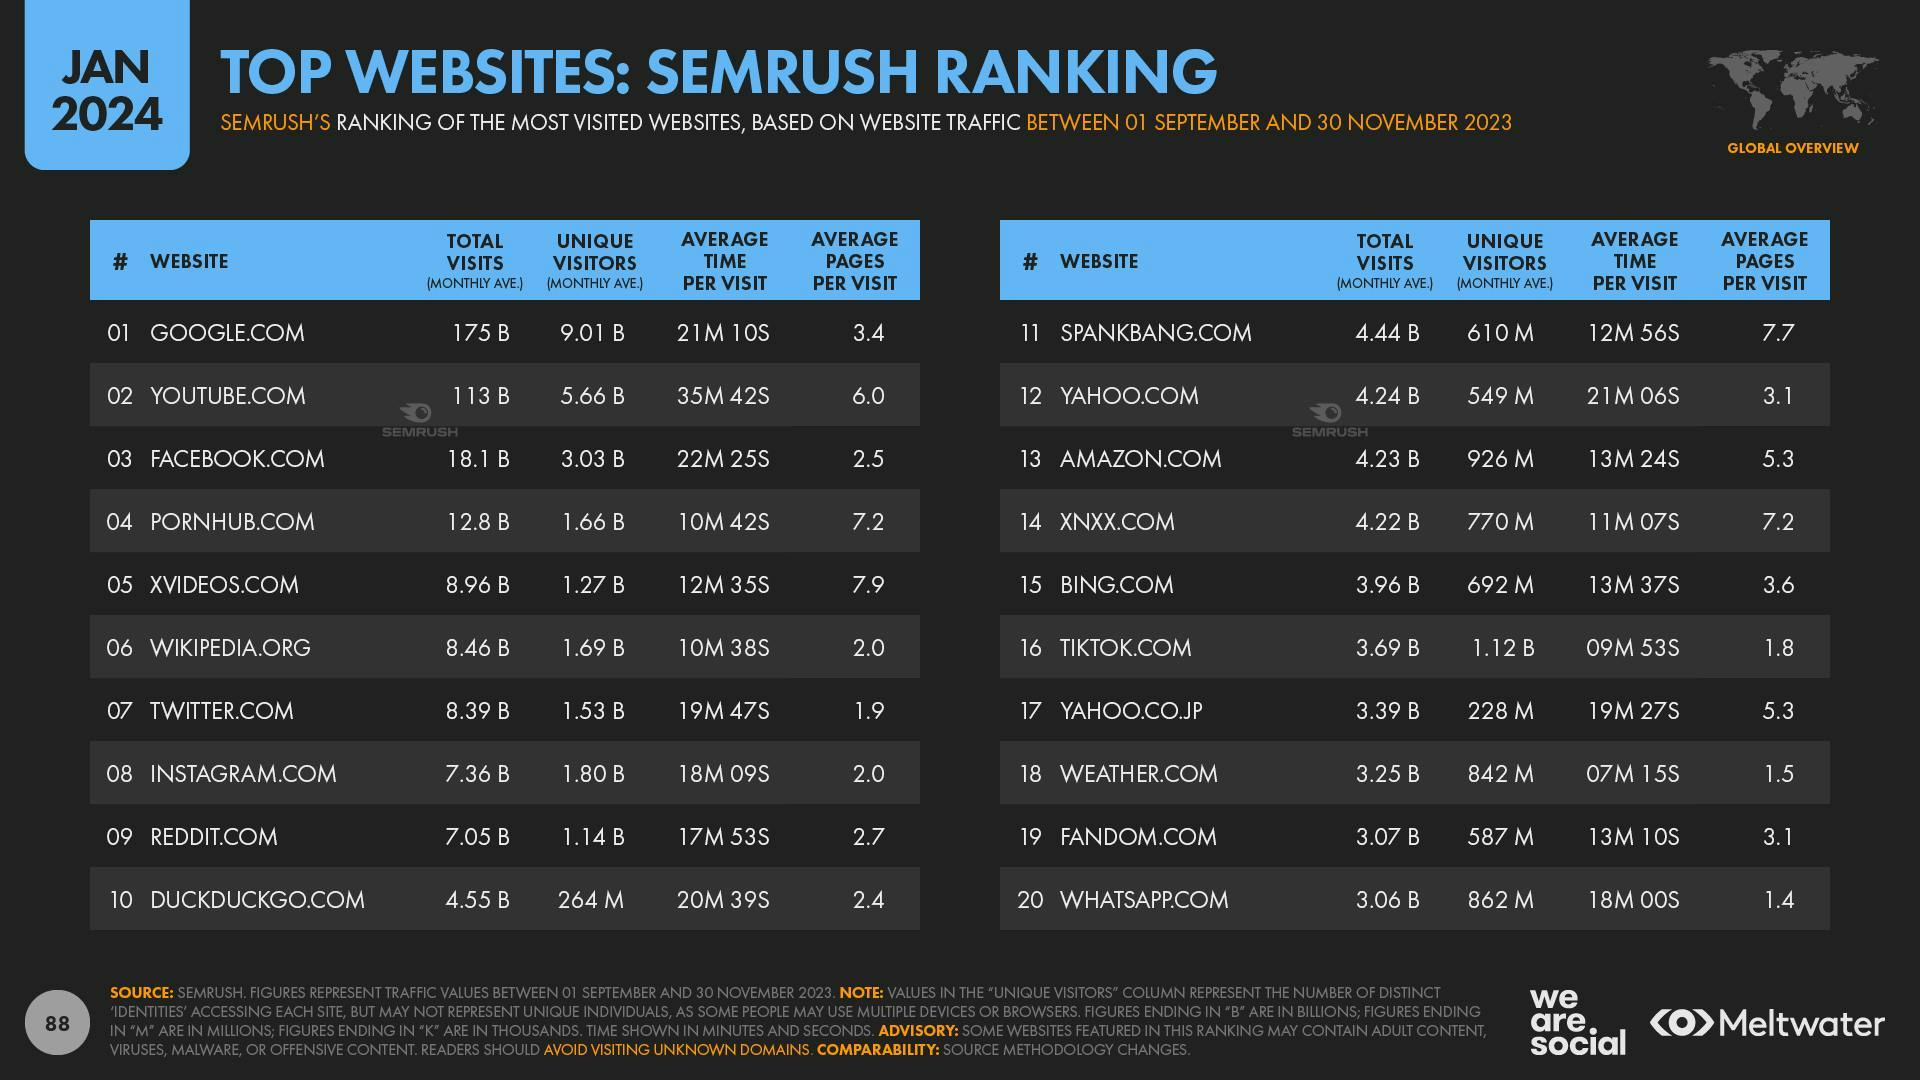 Top websites: Semrush ranking